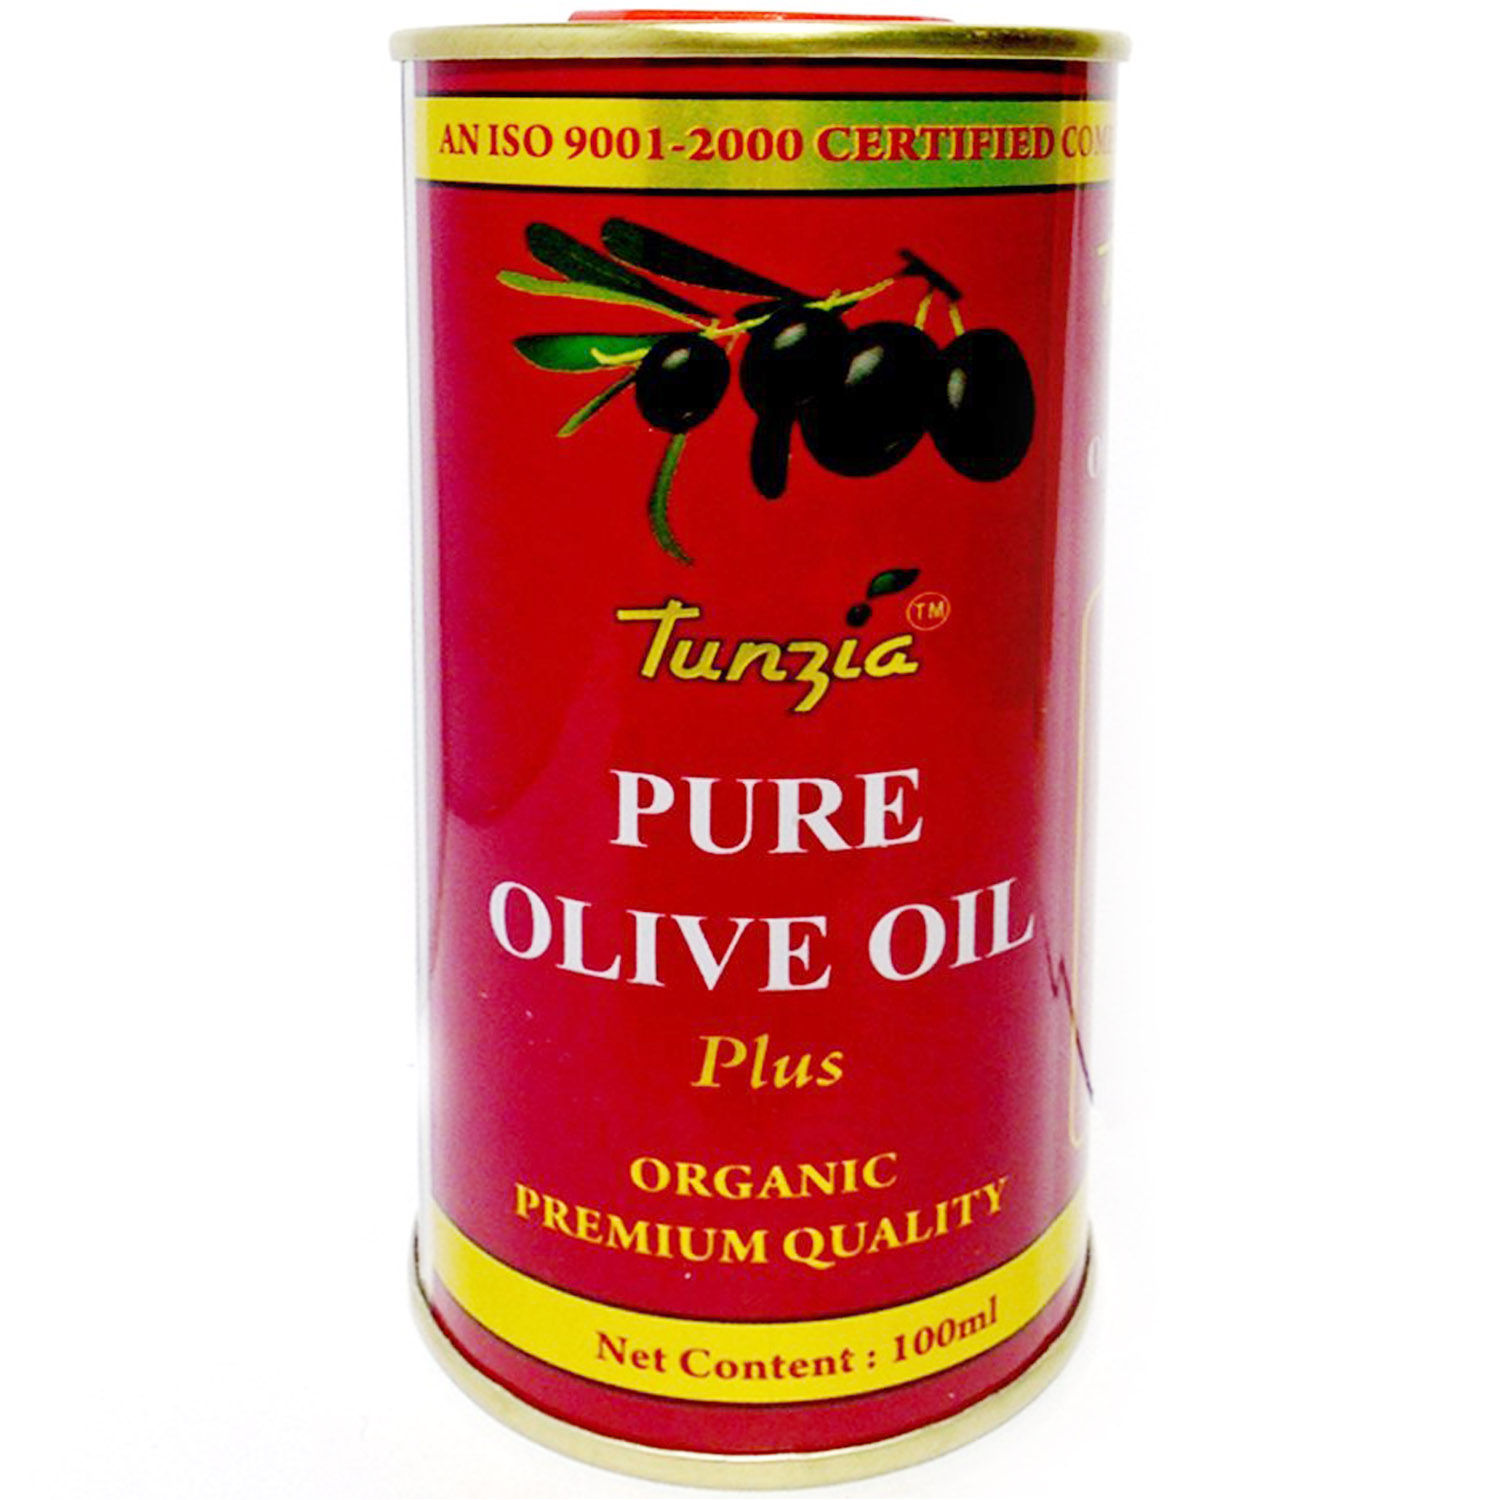 Buy Tunzia Pure Olive Oil, 100 ml Online